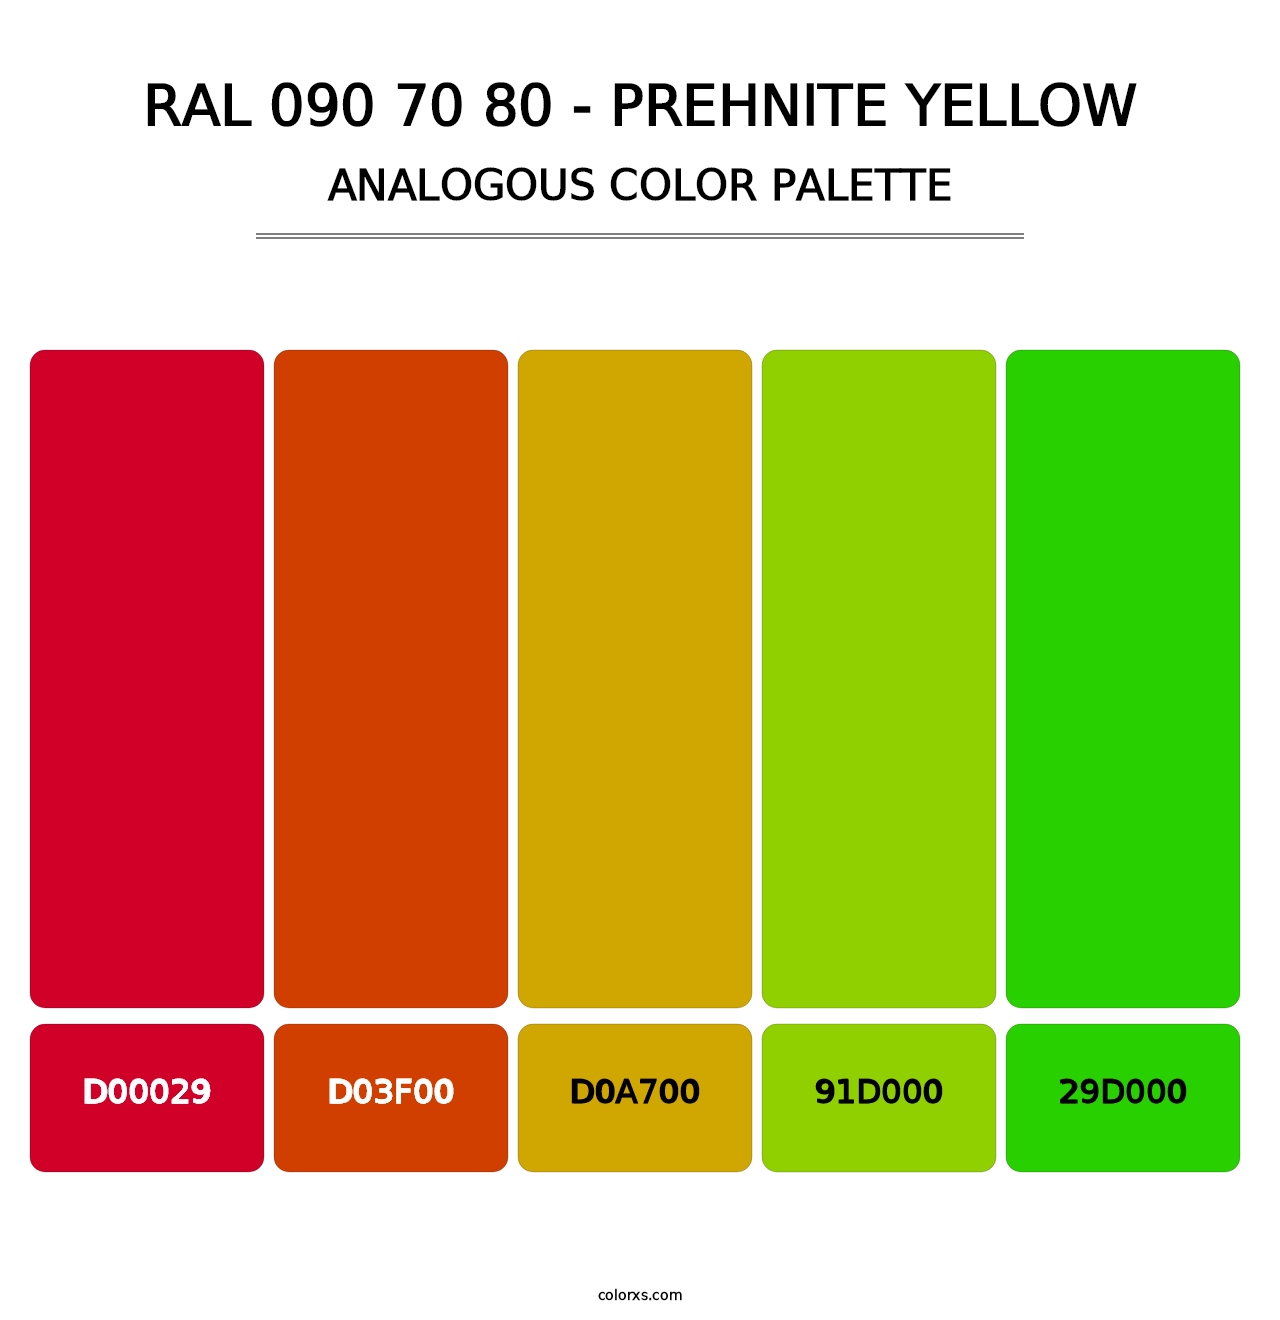 RAL 090 70 80 - Prehnite Yellow - Analogous Color Palette